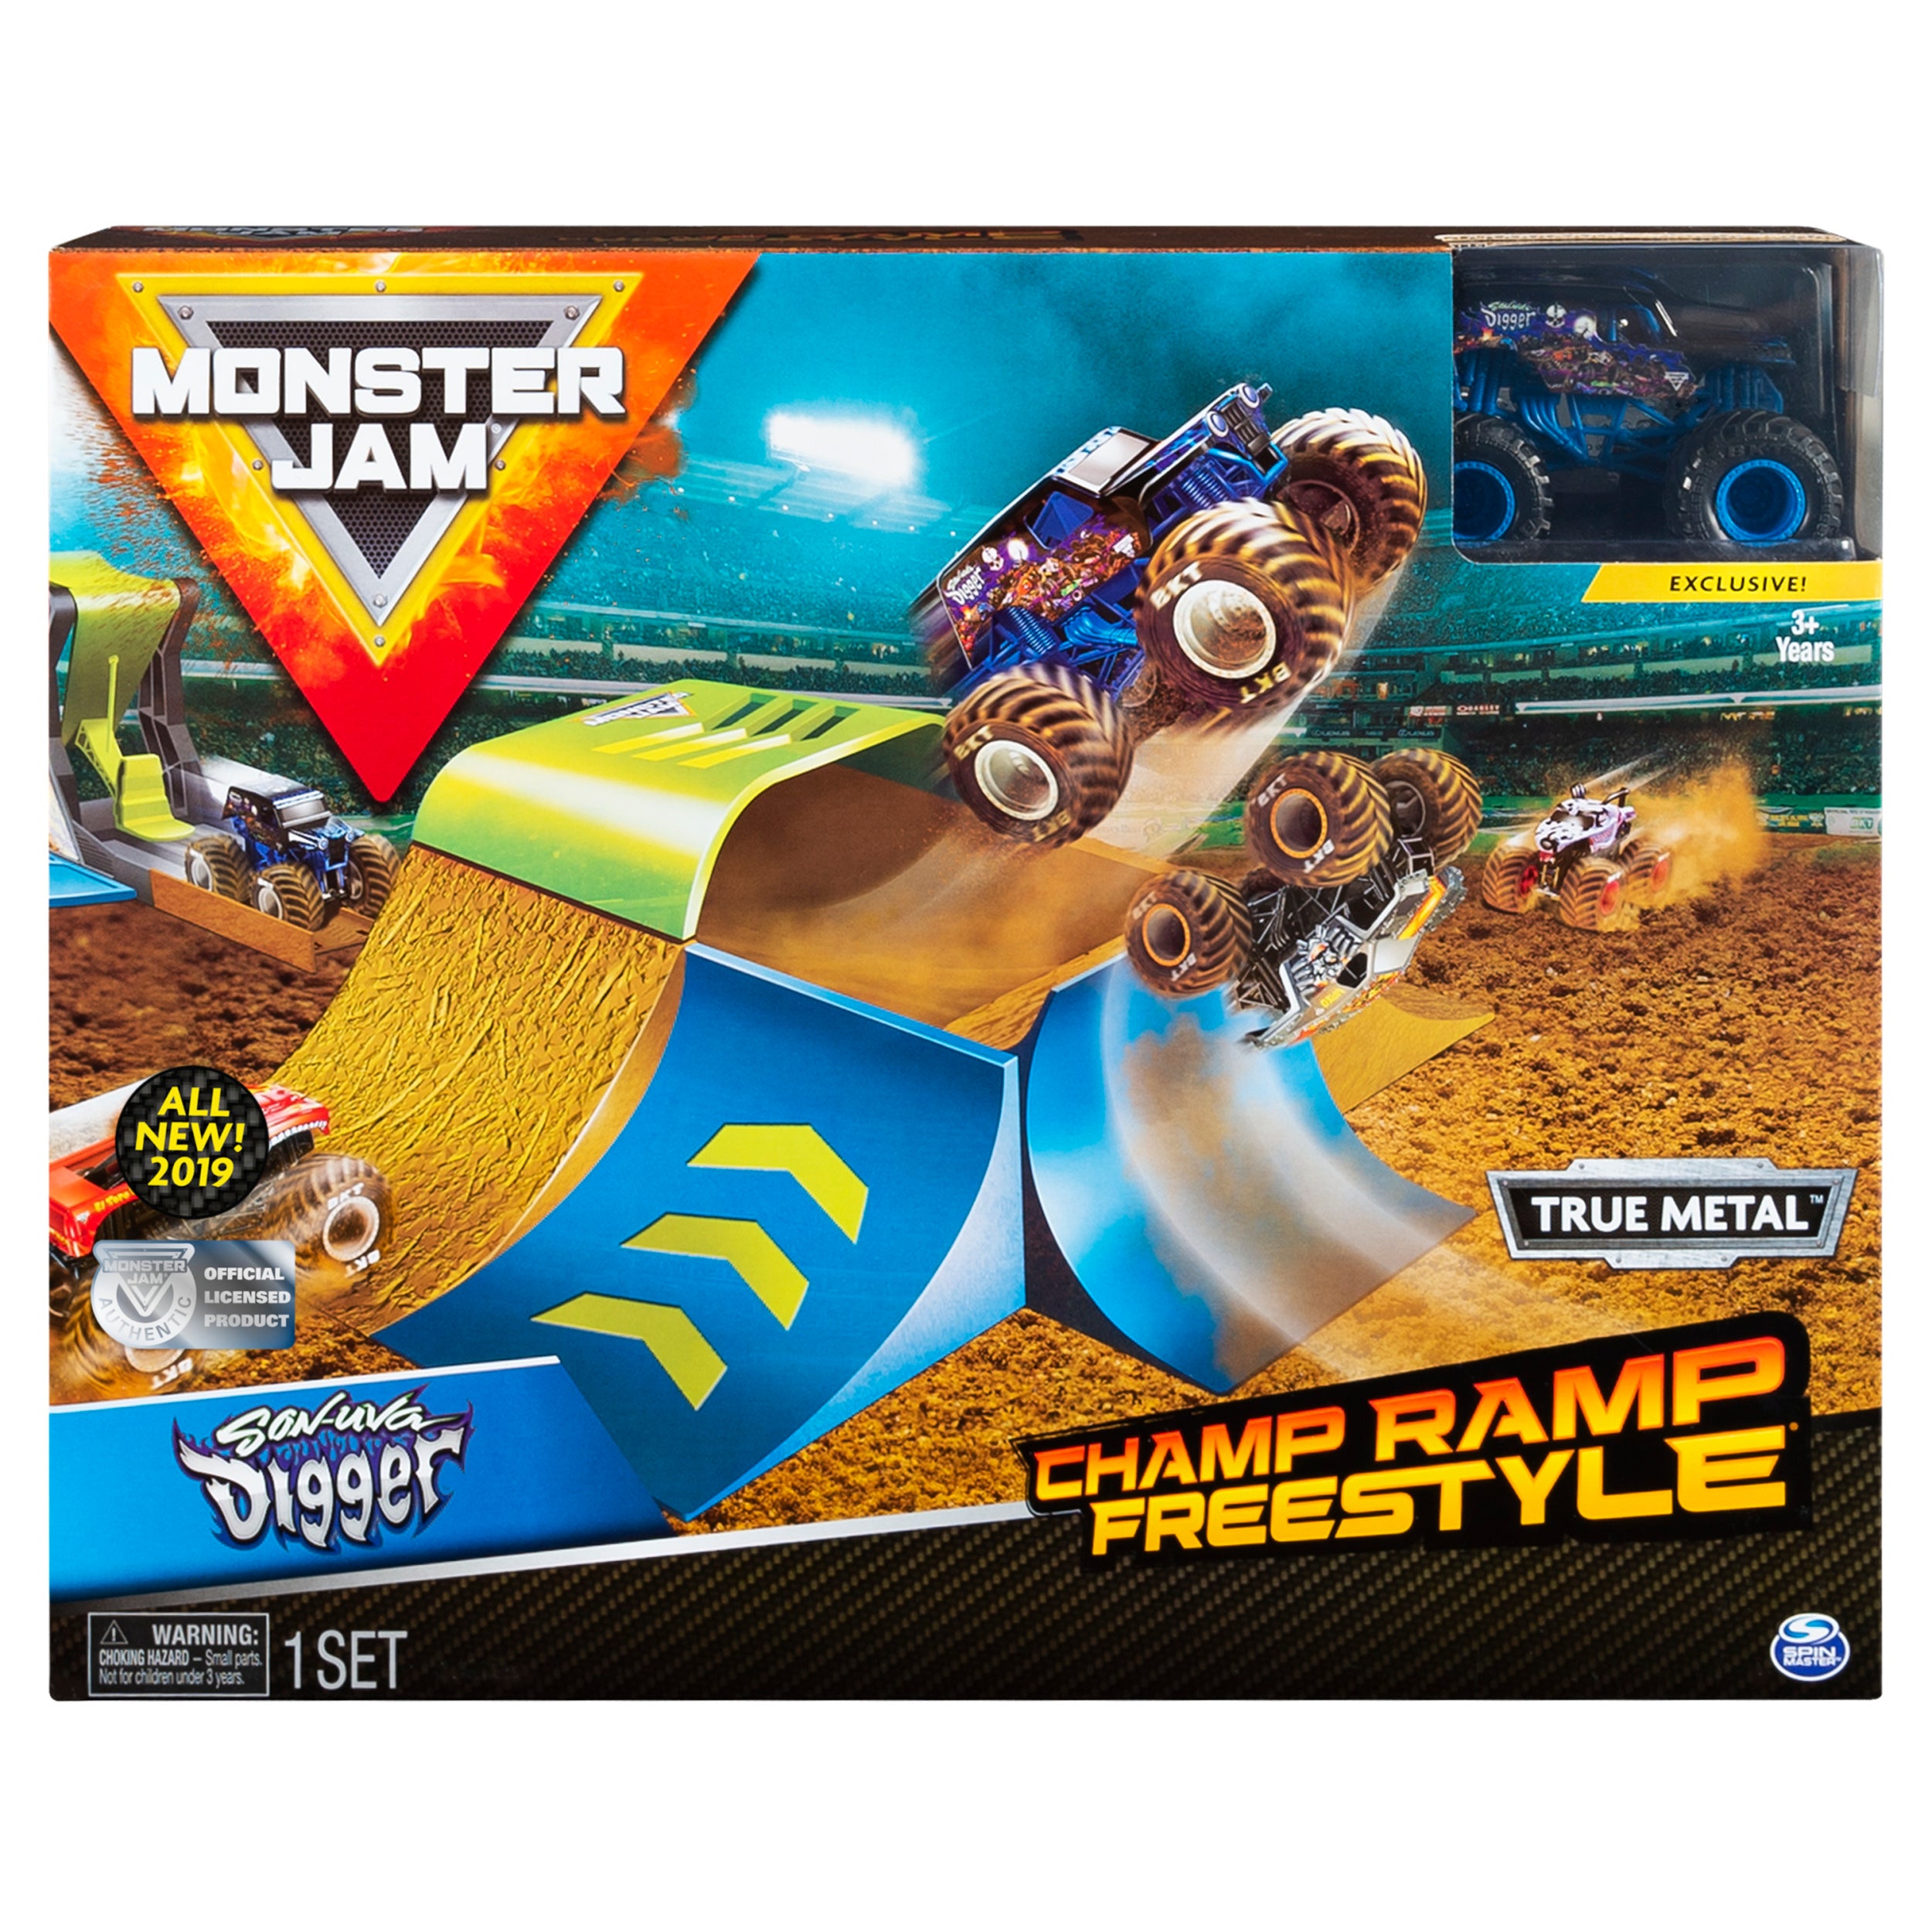 Monster Jam: Vehicle Playset